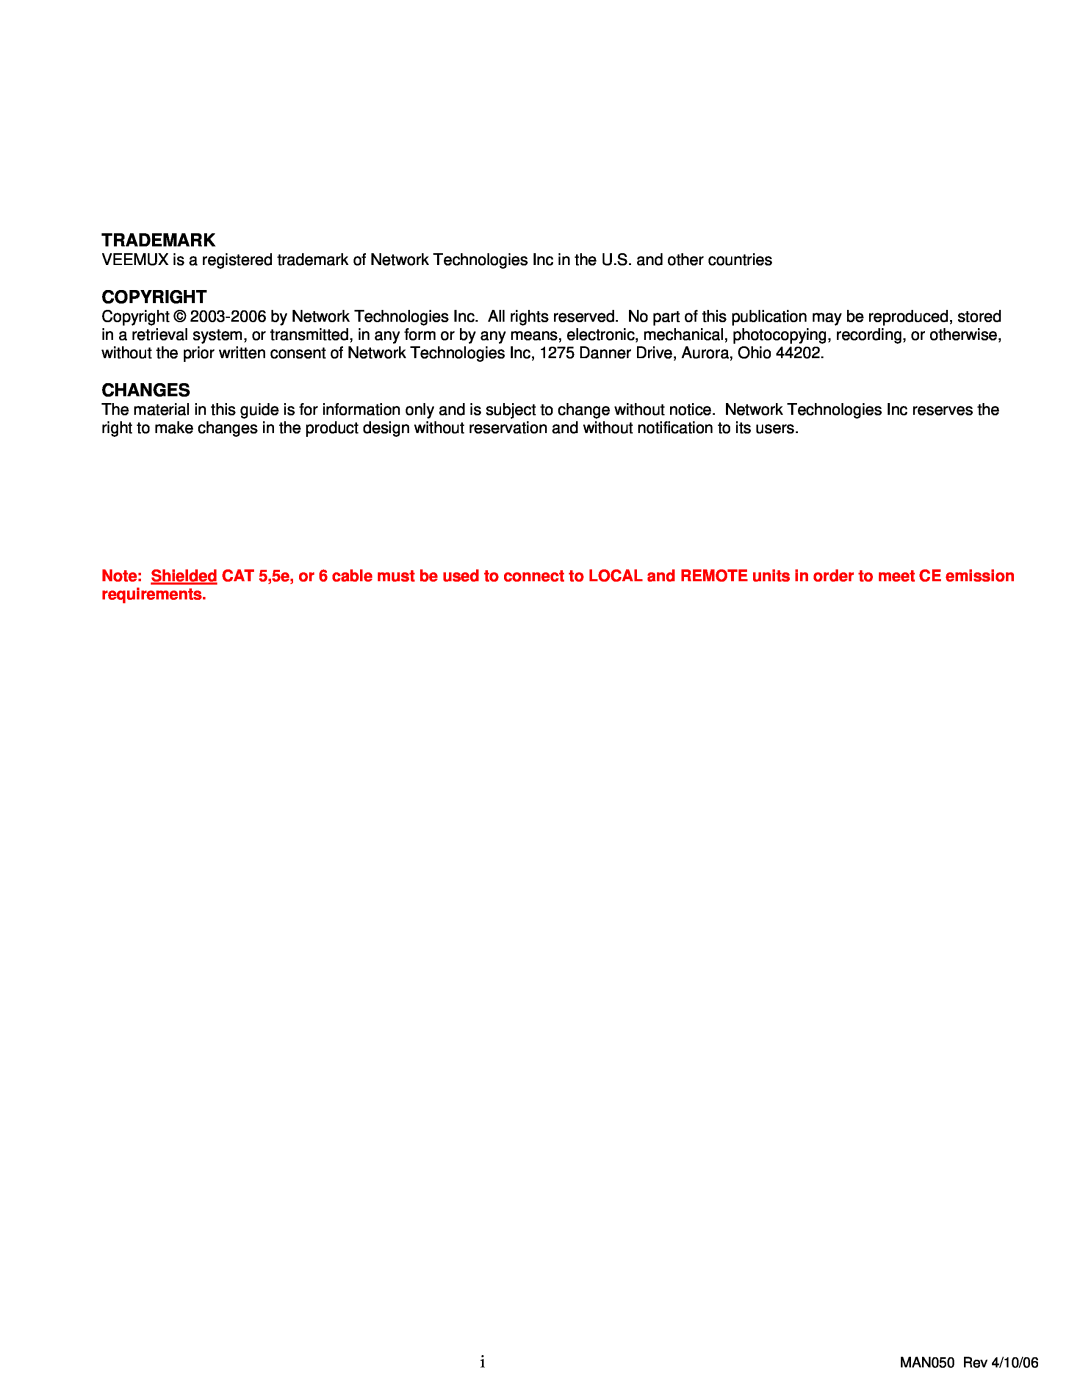 Network Technologies SM-nXm-C5AV-LCD operation manual Trademark, Copyright, Changes 